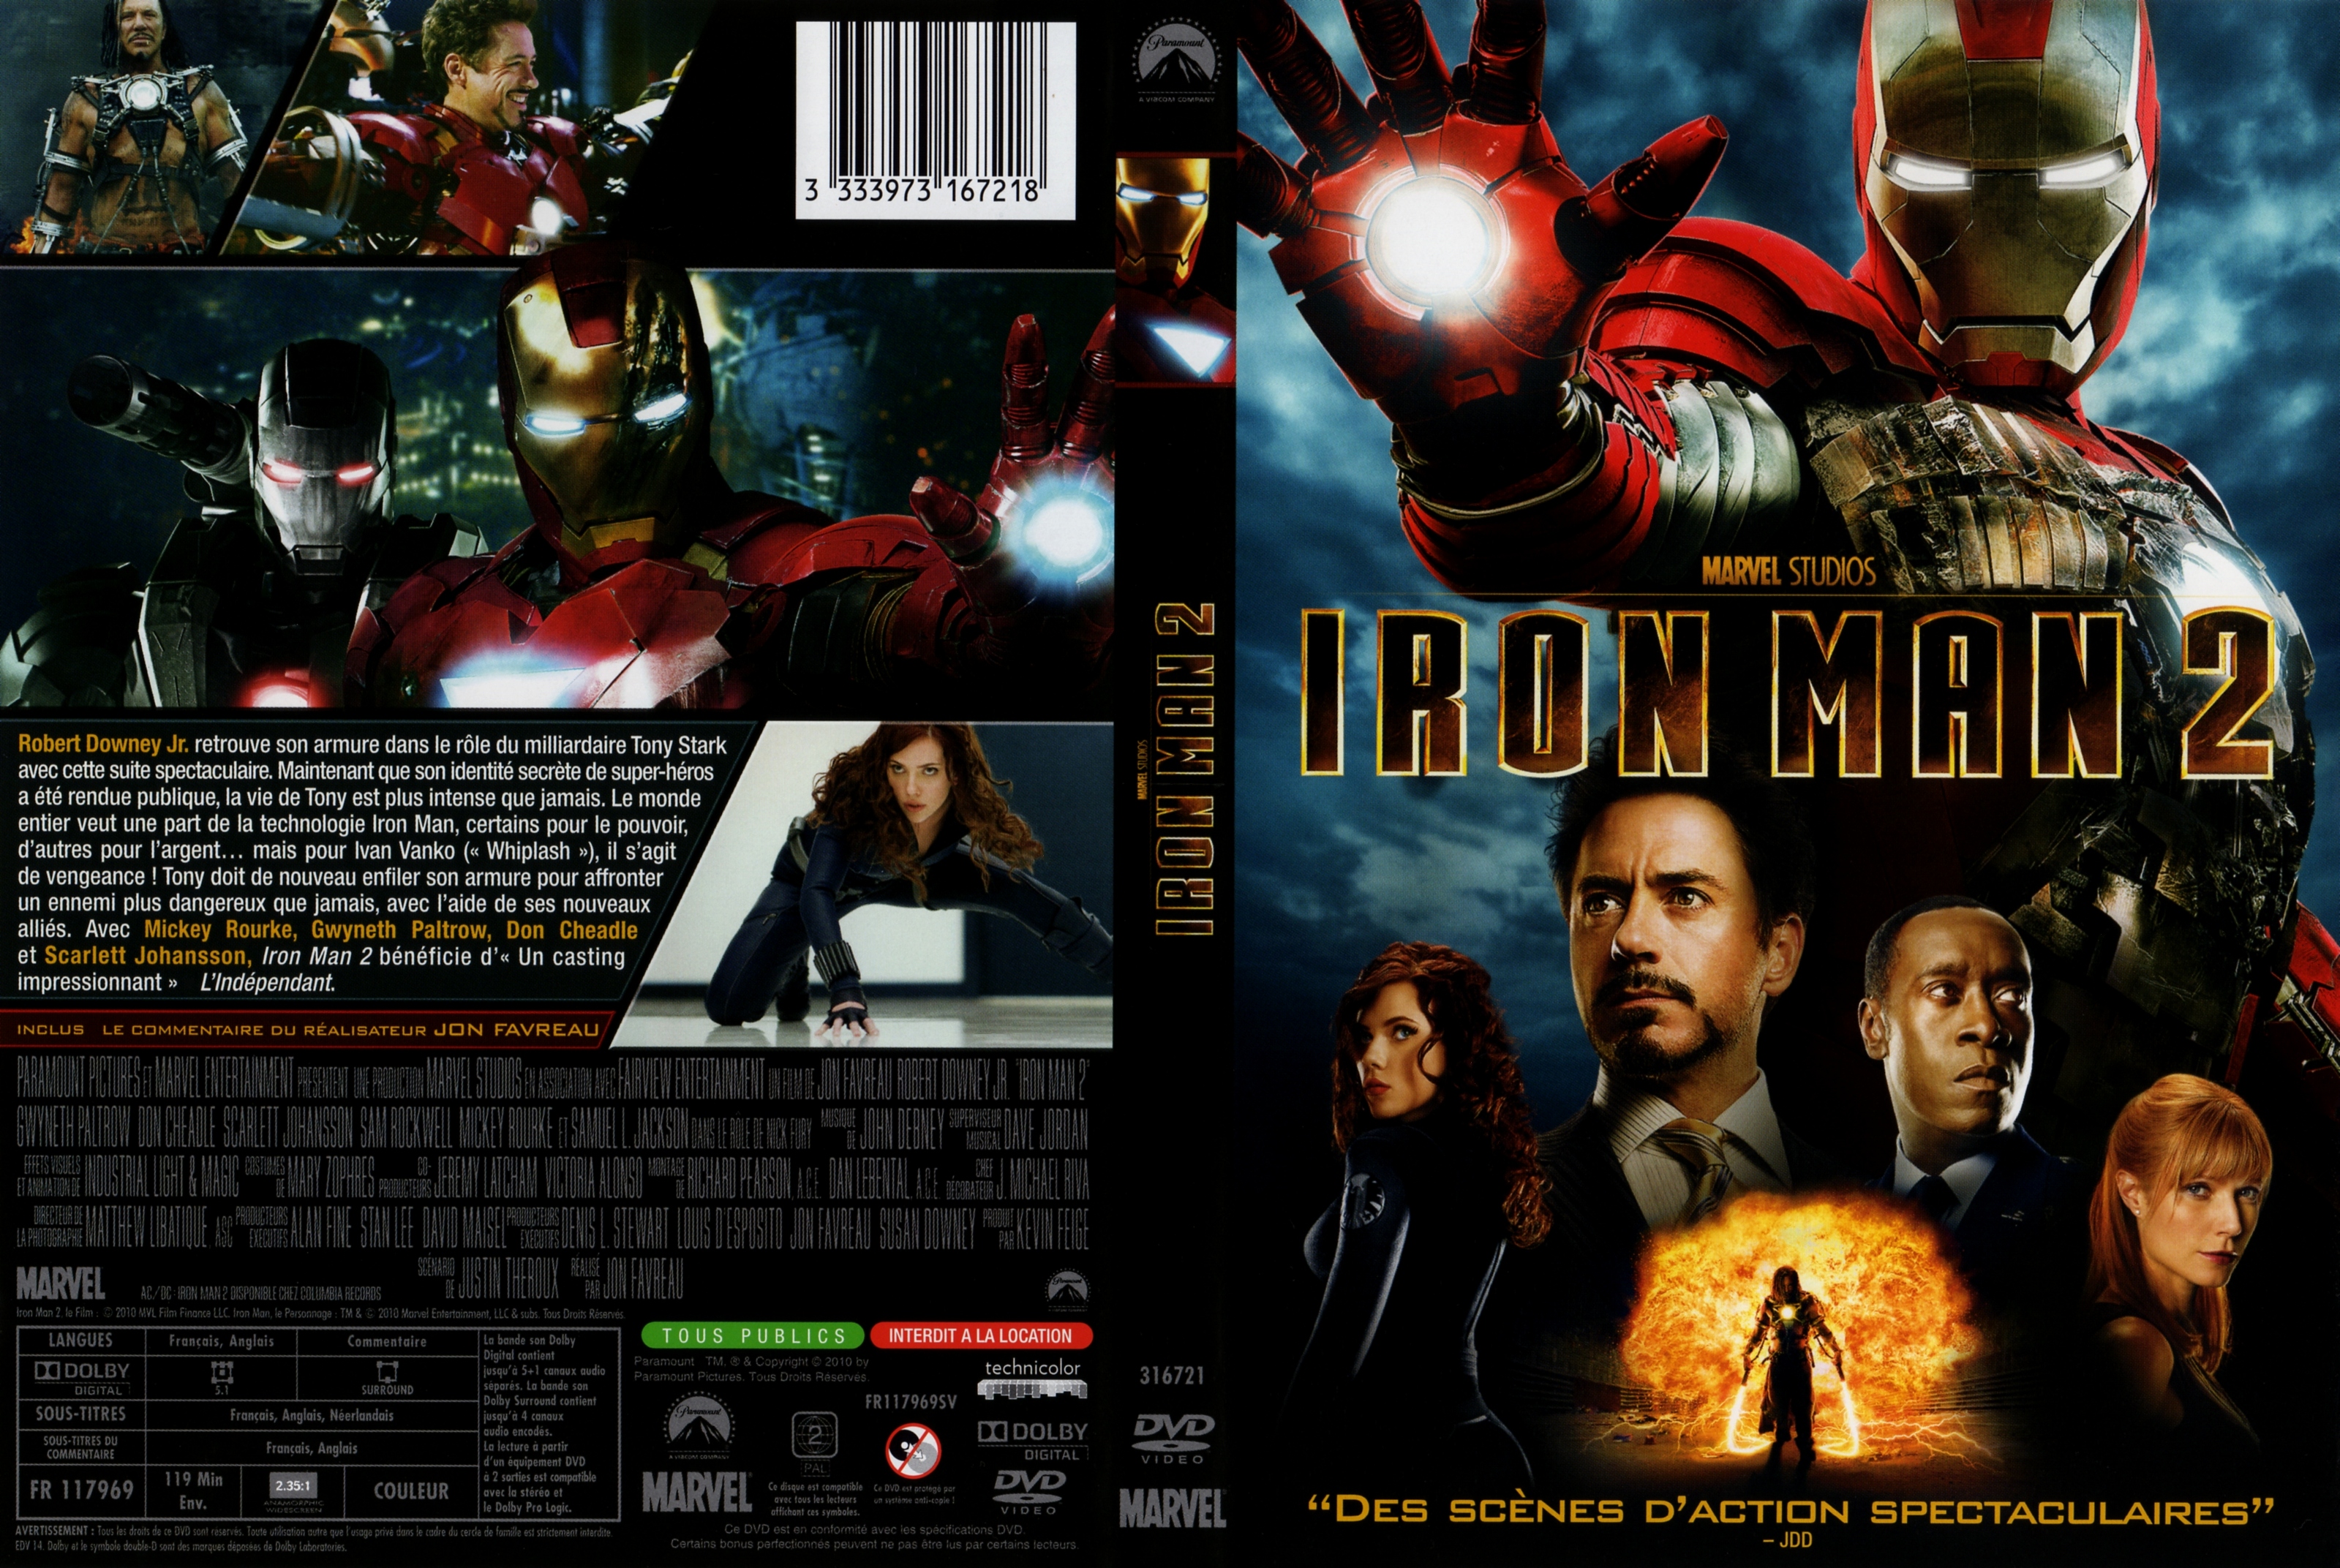 Jaquette DVD Iron man 2